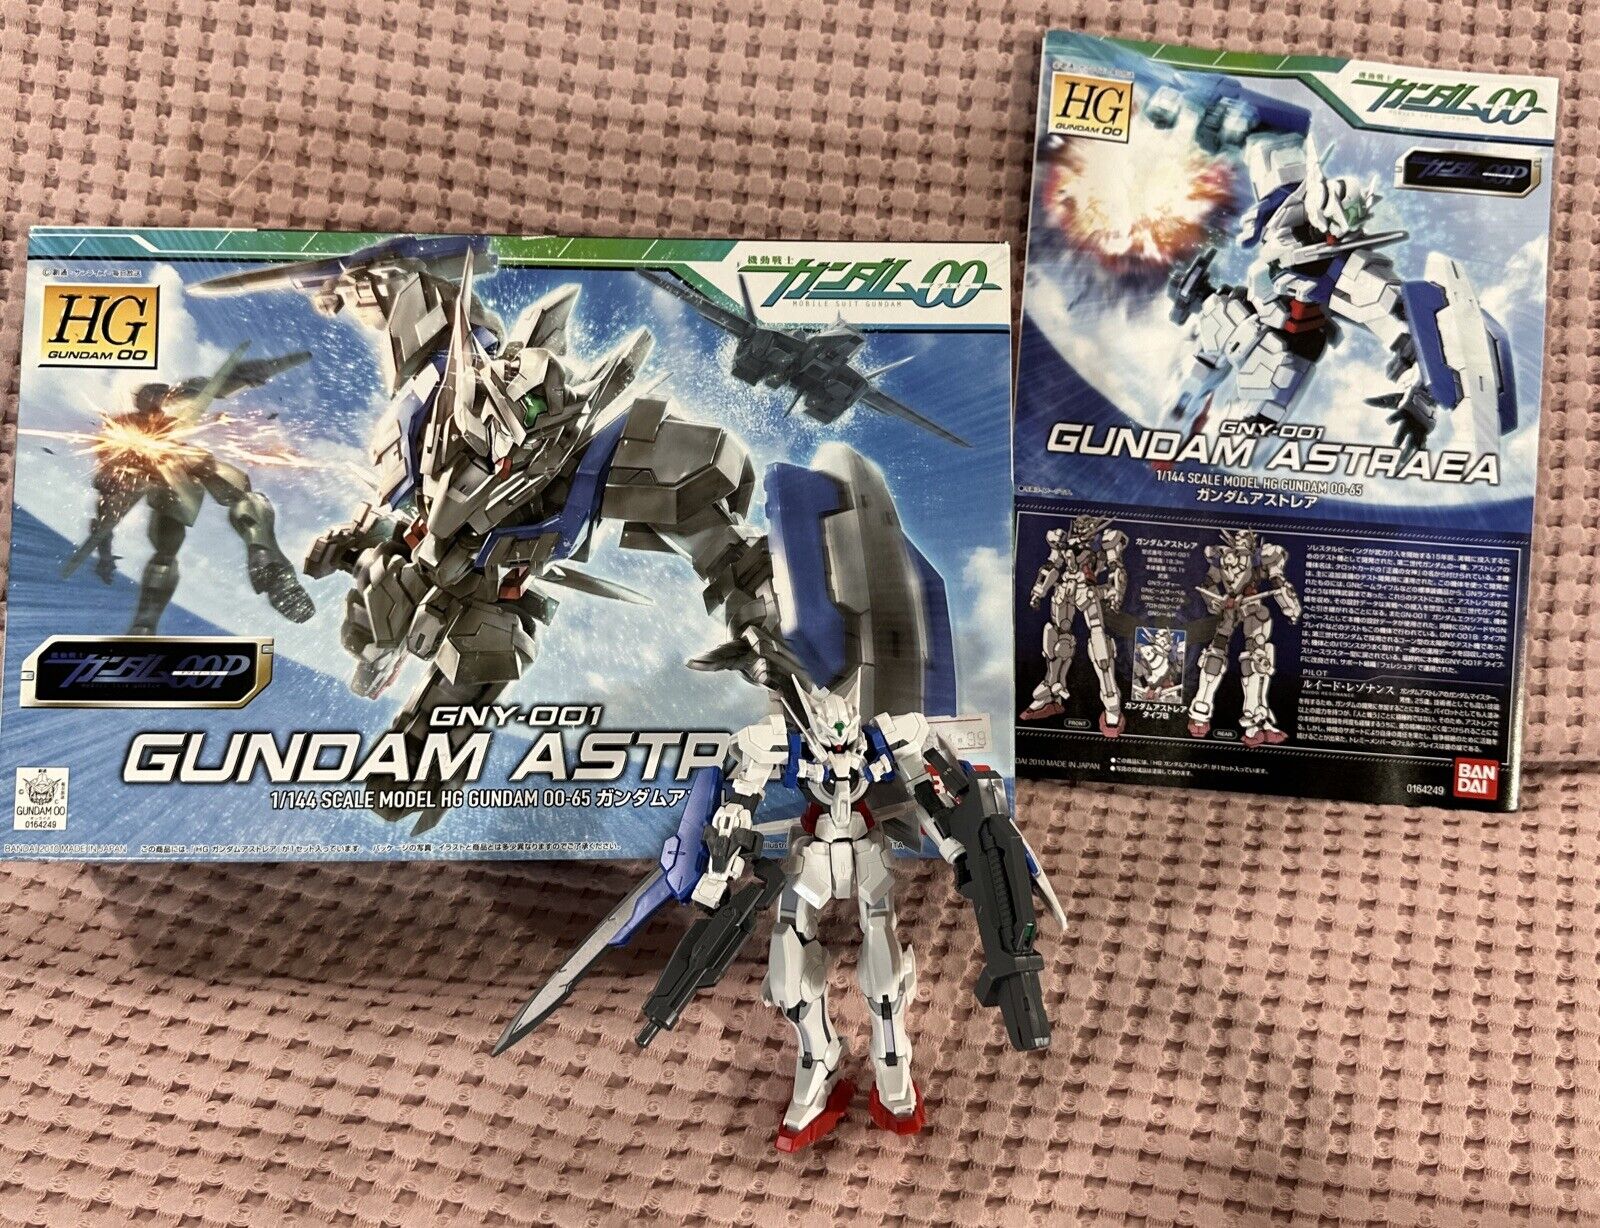 Bandai GNY-001 Gundam Astraea HG Bandai Gundam 00 Action Figure Model 65